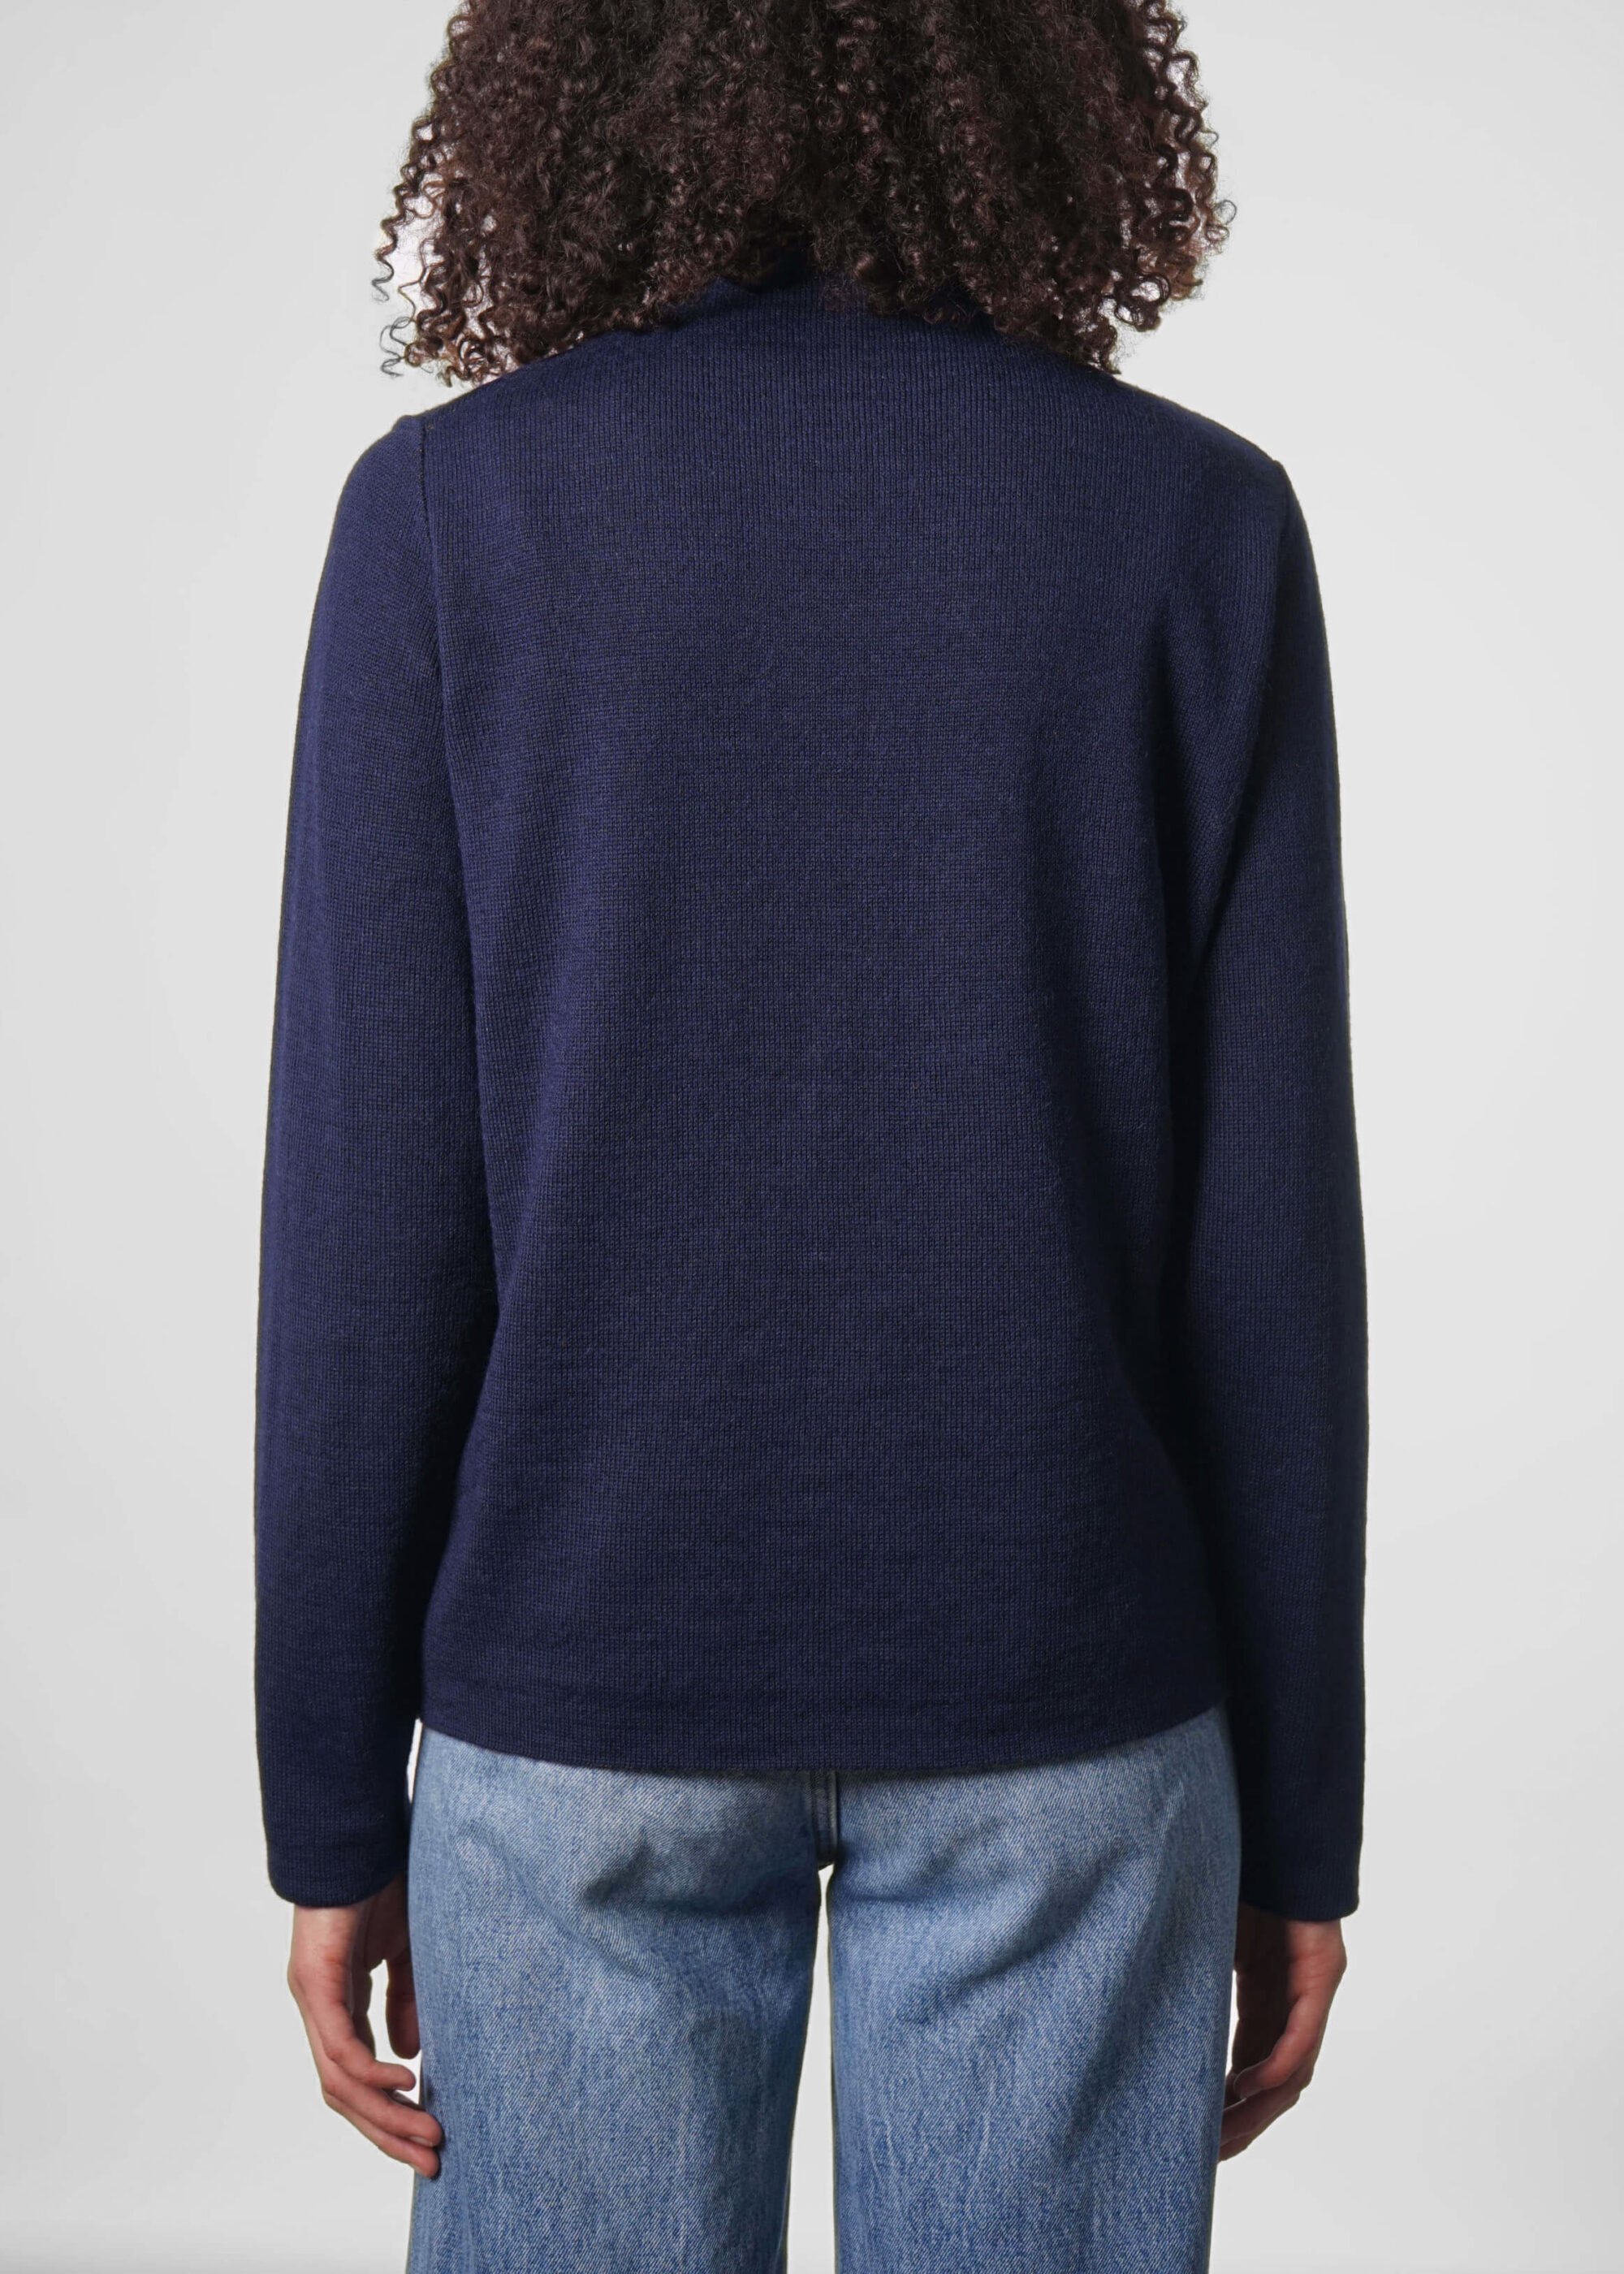 Product image for »Blauaras Ochre« Reversible Baby Alpaca Sweater